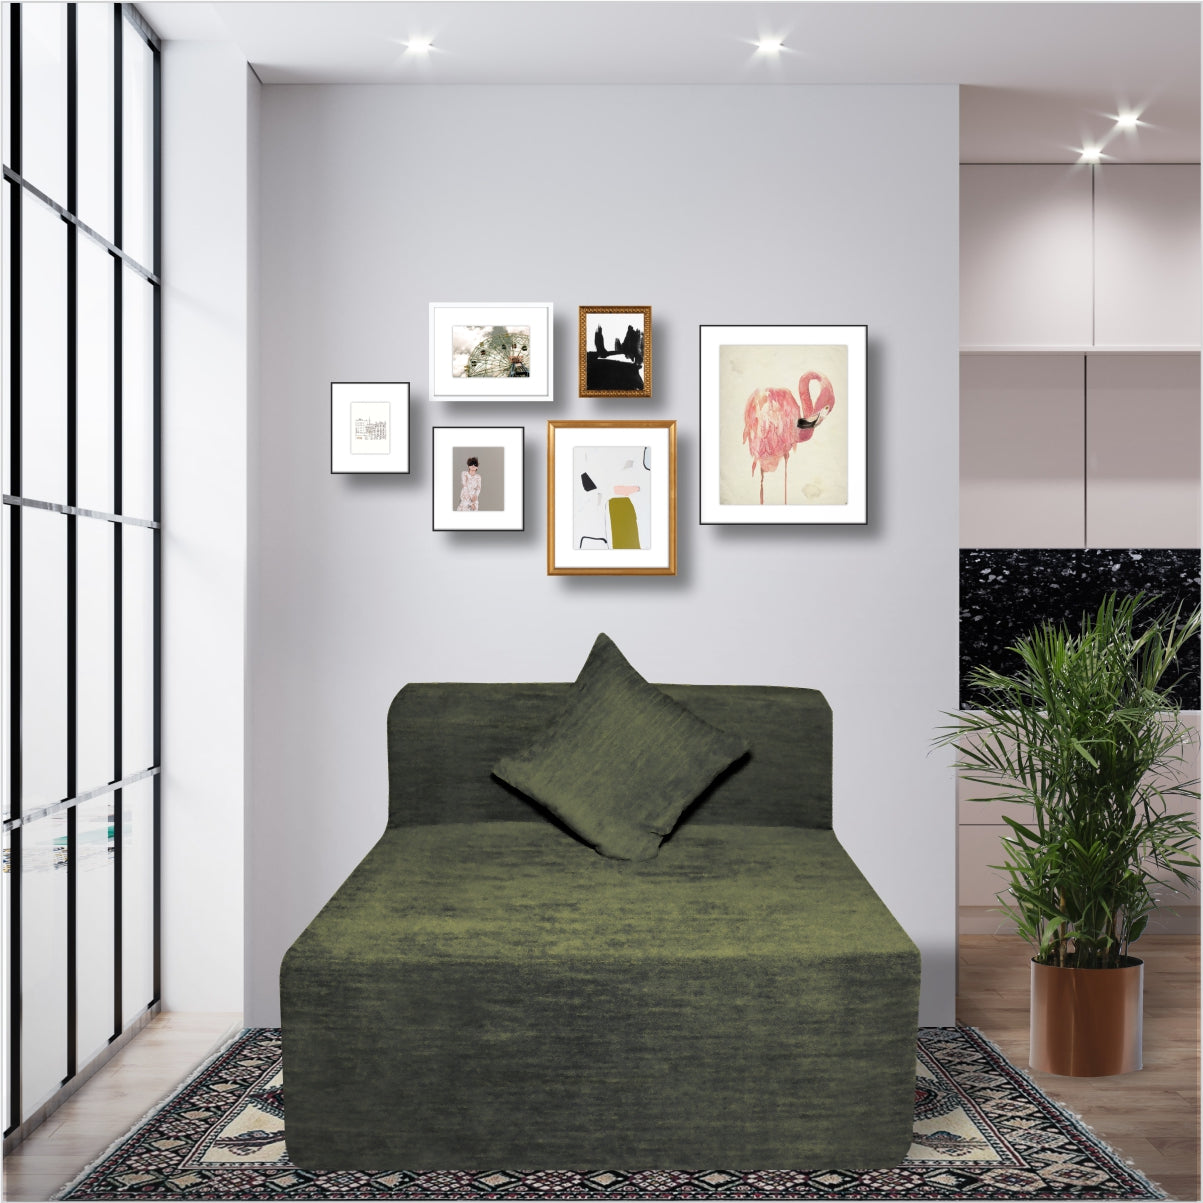 Emerald Green Molfino Fabric 6'×3' Sofa cum Bed with 1 Cushion